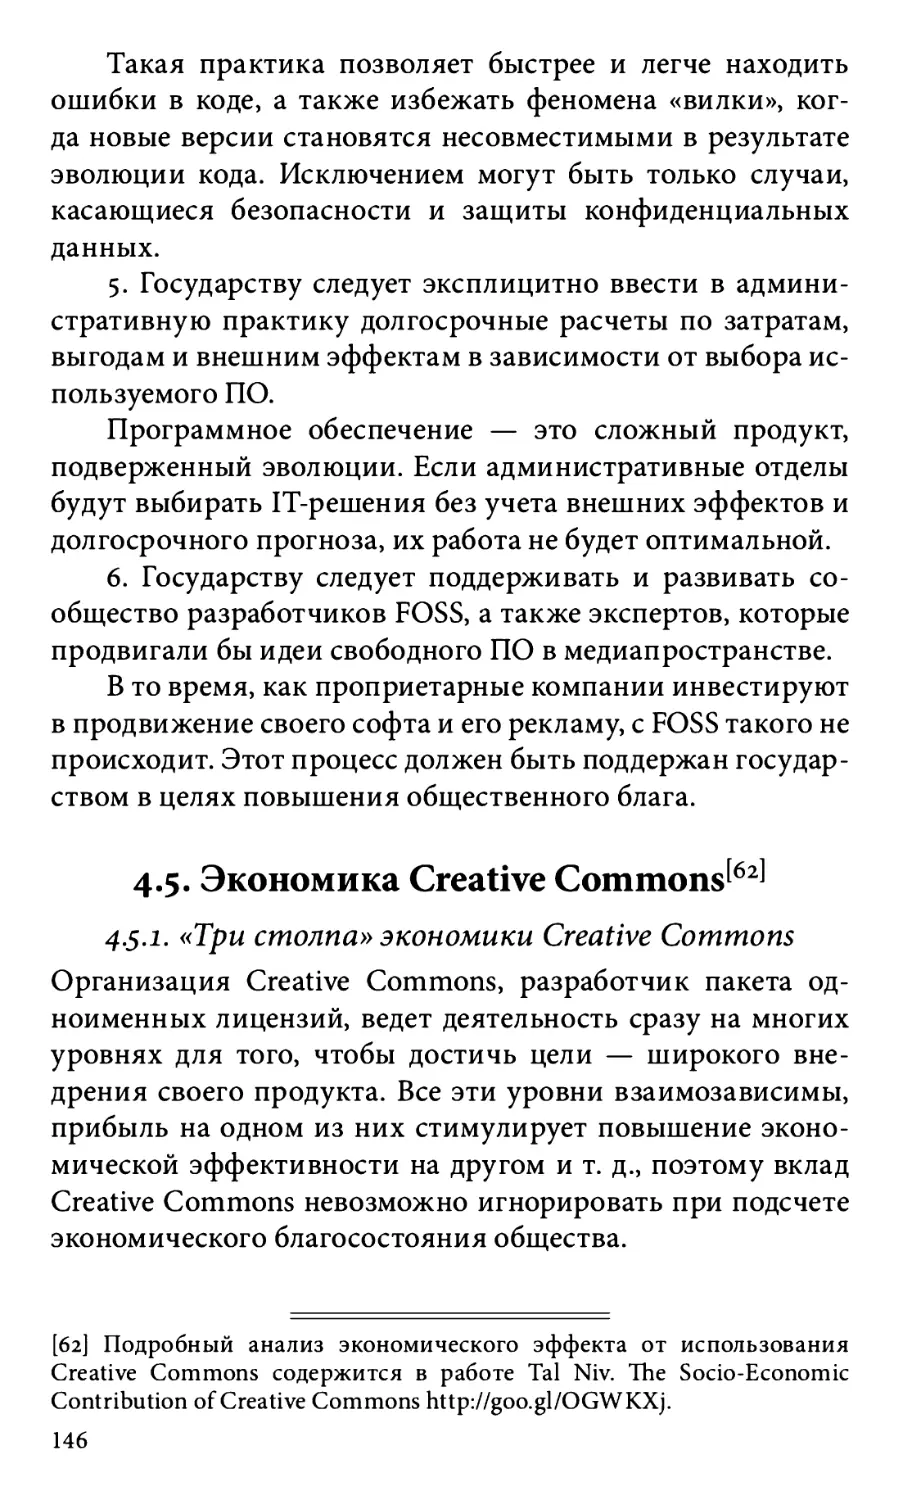 4.5. Экономика Creative Commons